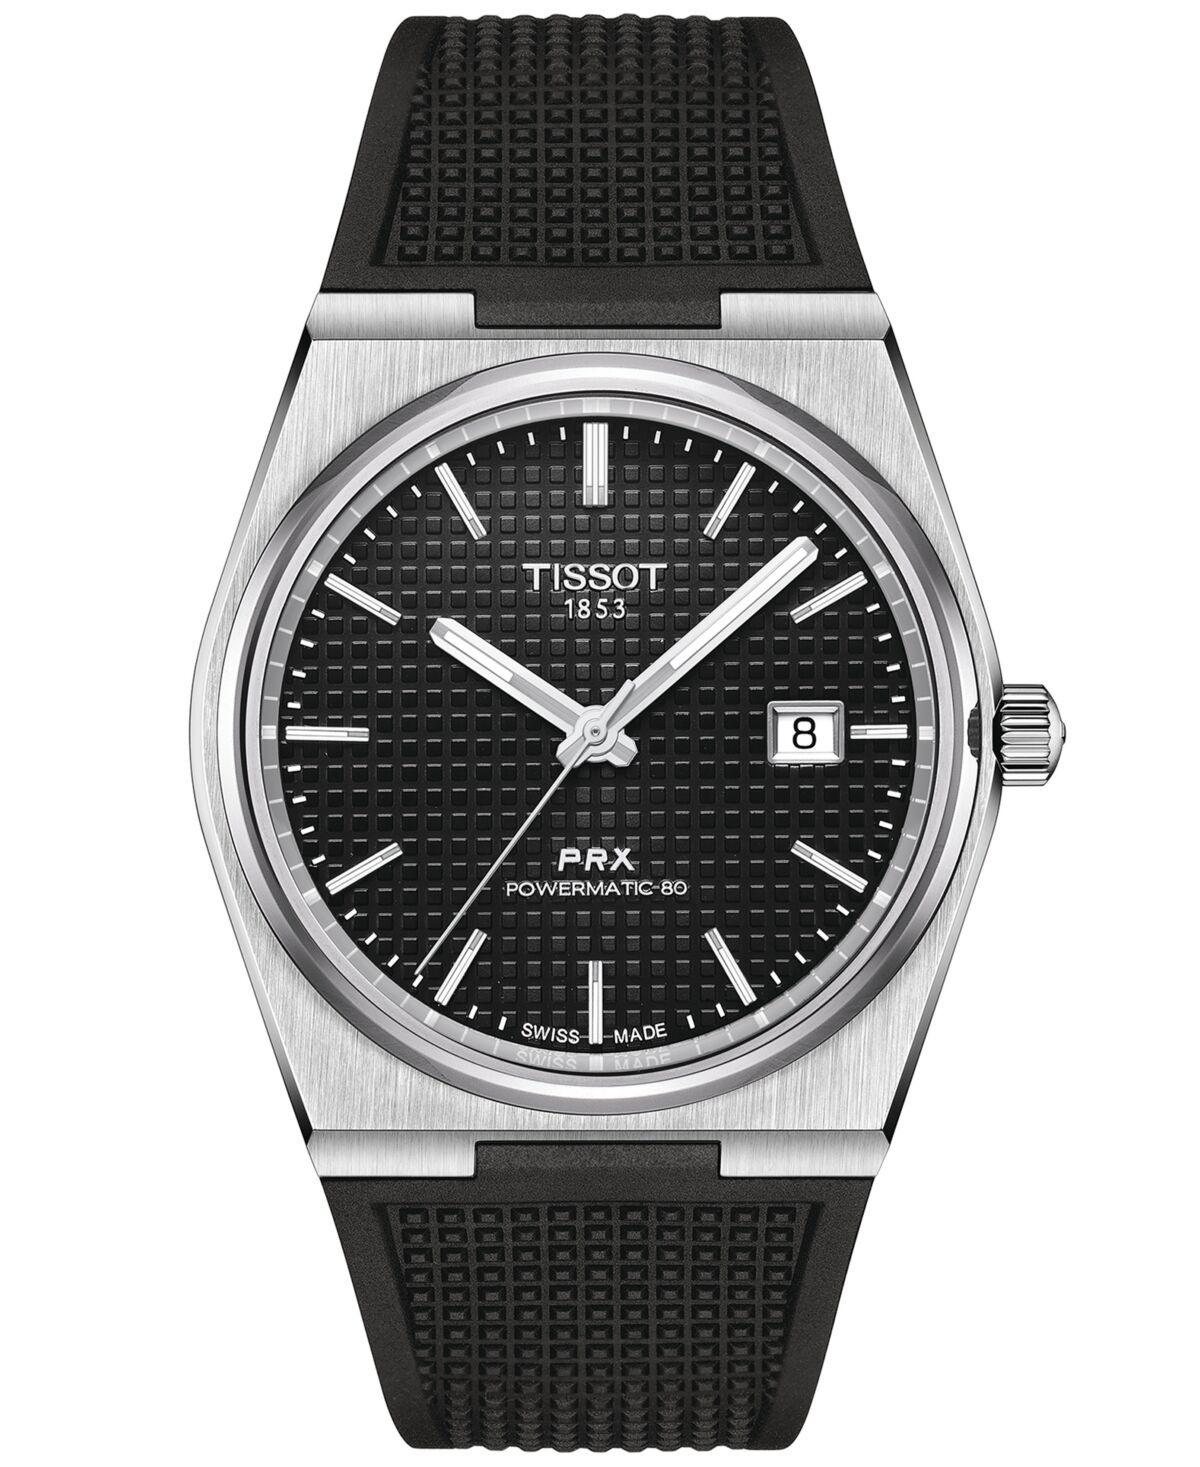 Tissot Men's Swiss Automatic Prx Black Rubber Strap Watch 40mm